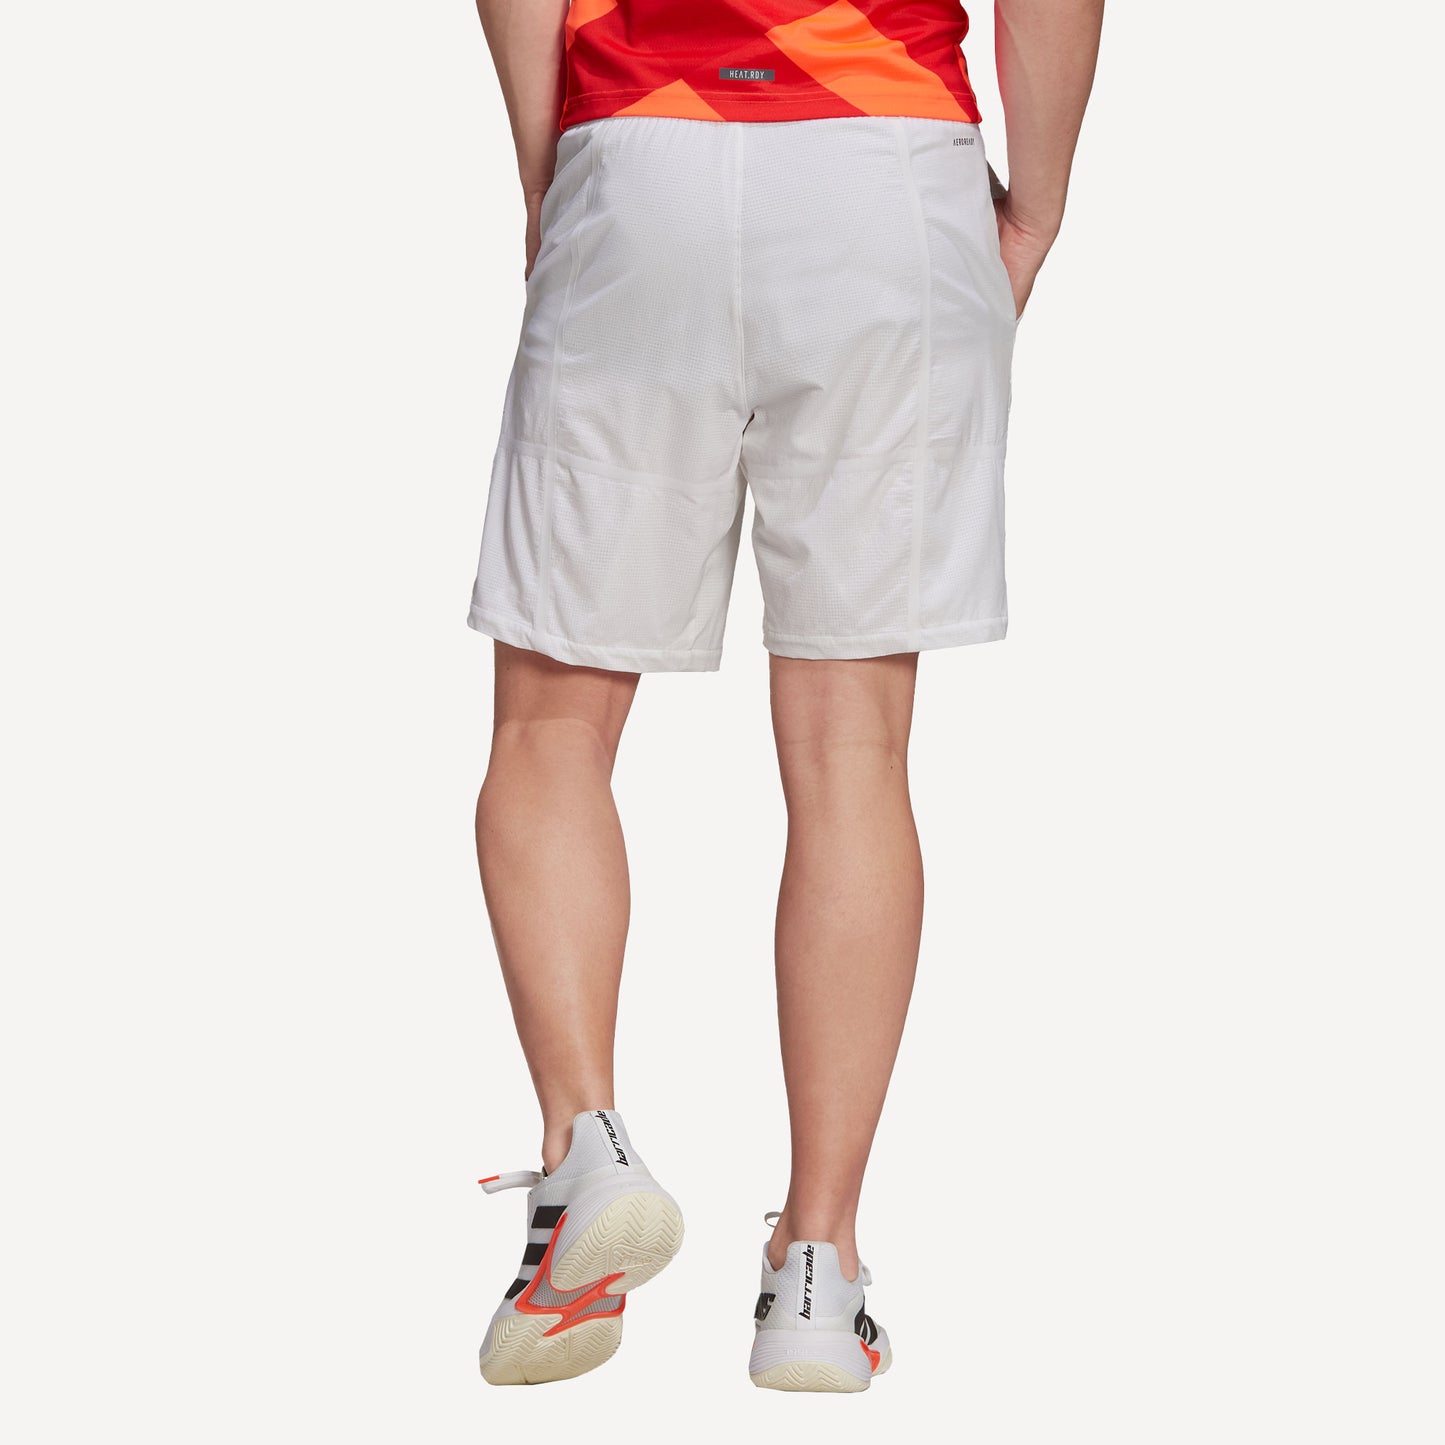 adidas Ergo Men's 7-Inch Tennis Shorts White (2)